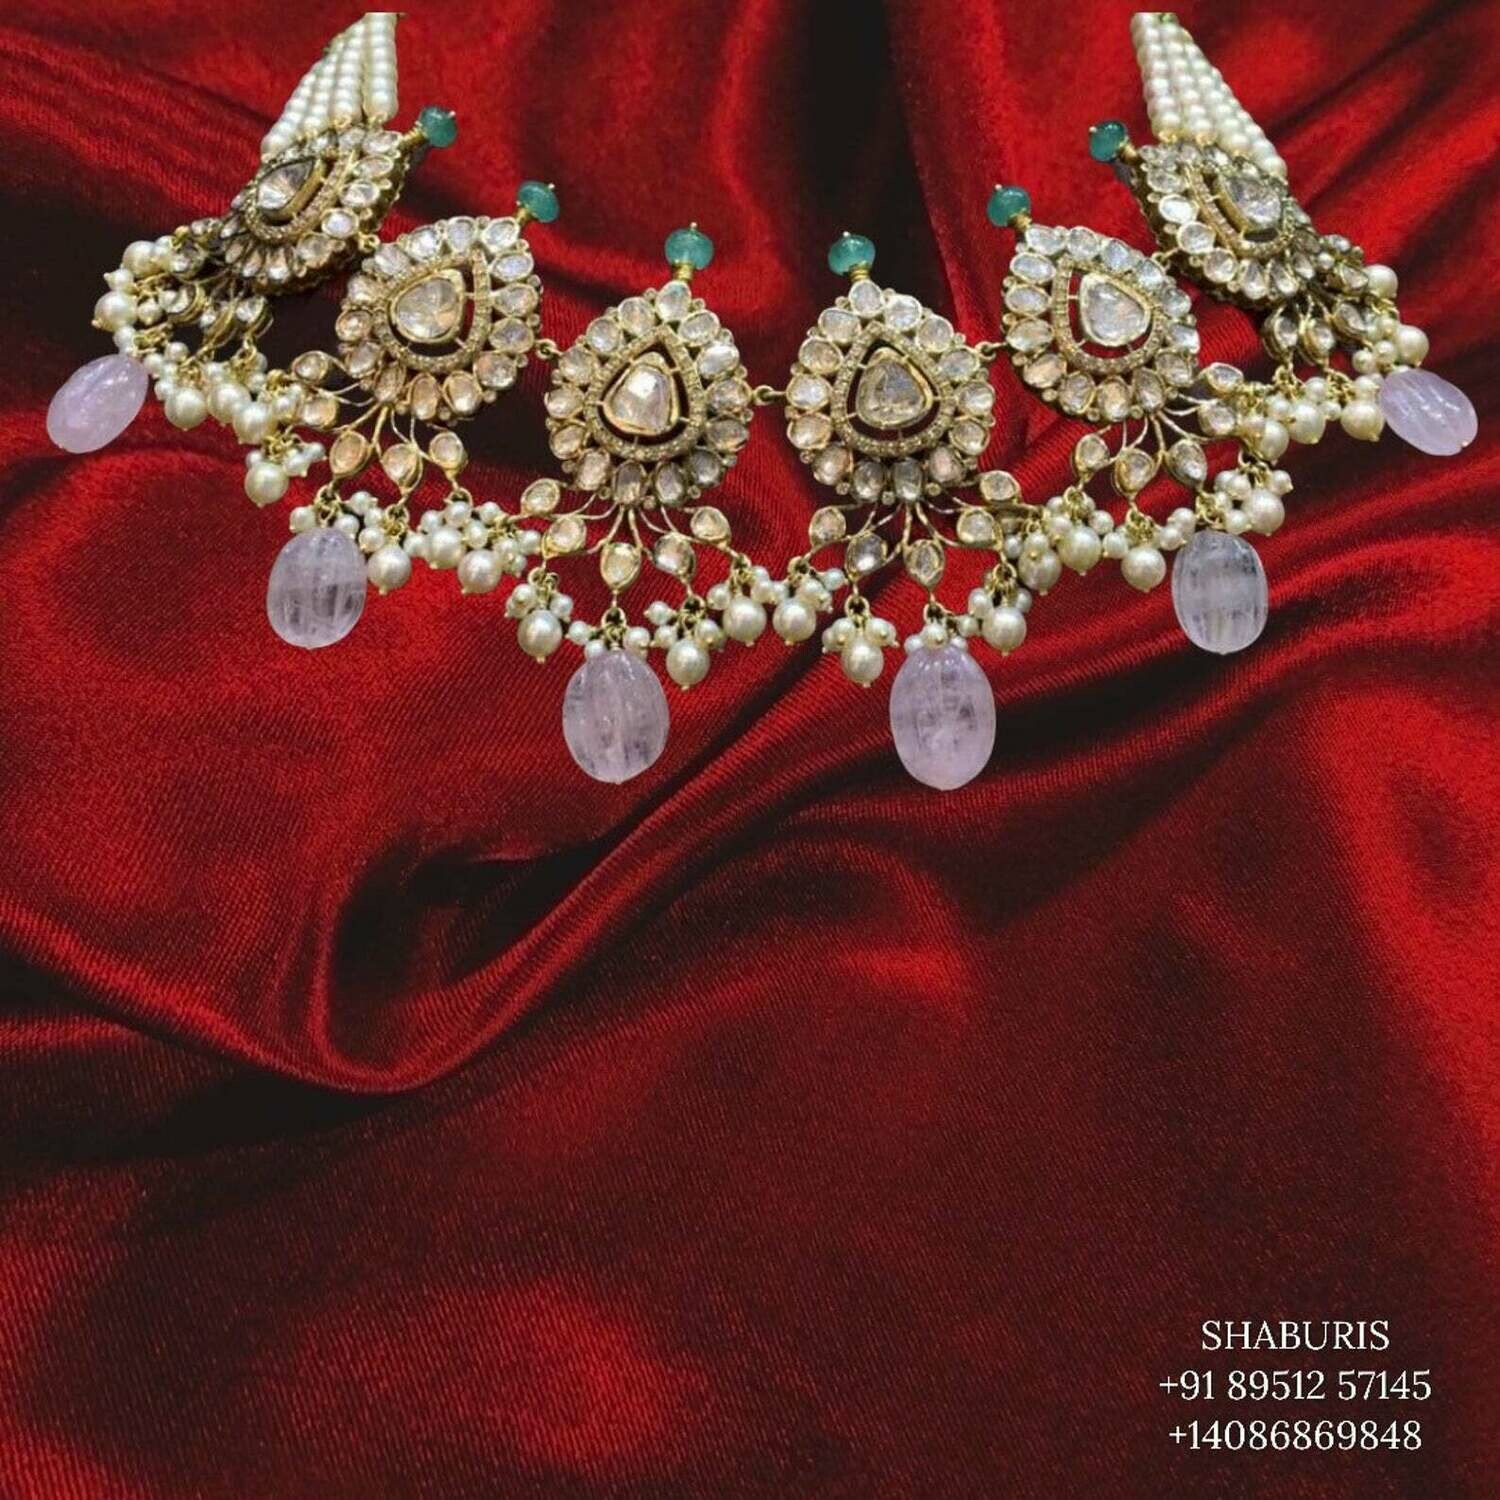 Latest Indian Jewelry,South Indian Jewellery,Pure silver diamond jewelry,polki choker,south Indian Jewelry designs-SHABURIS